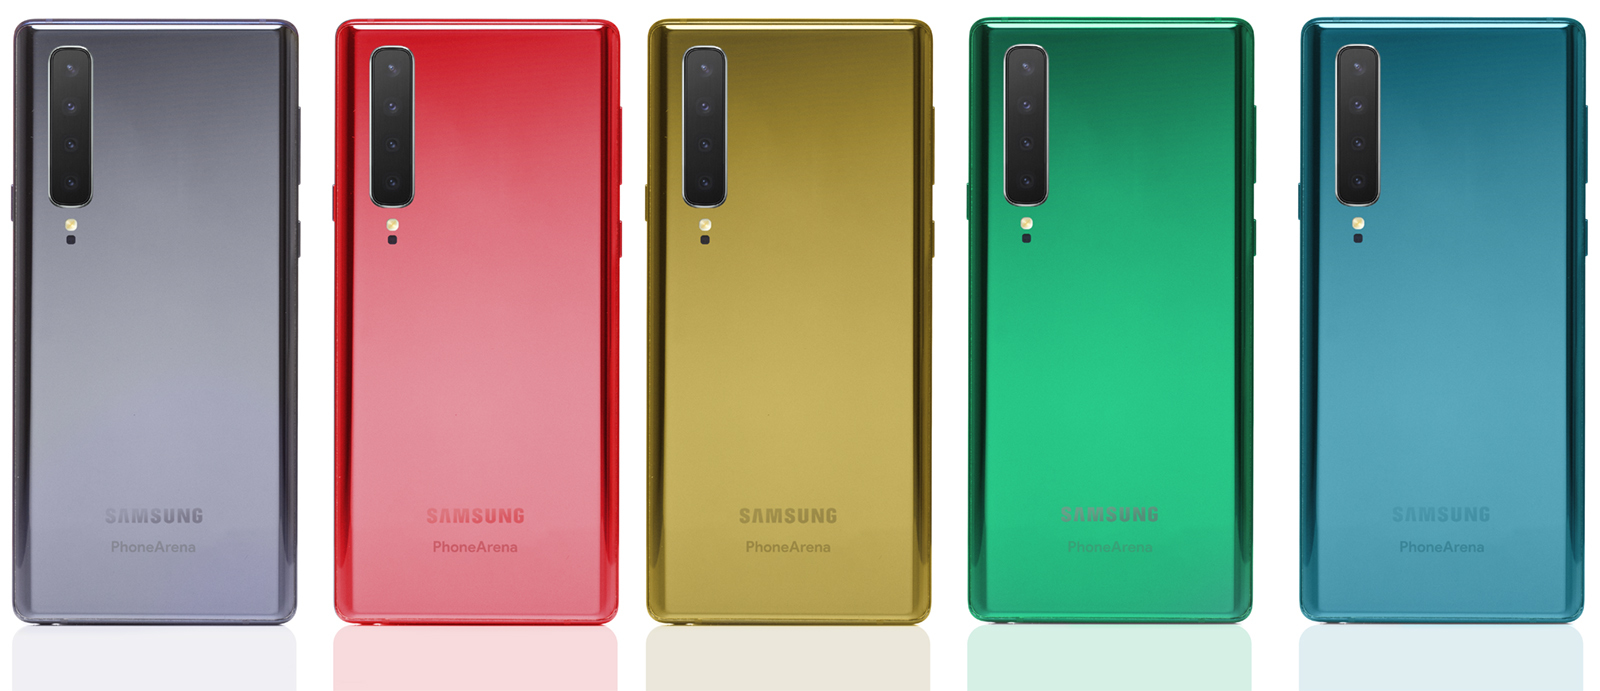 Samsung Galaxy Note 10 появился на первых фото